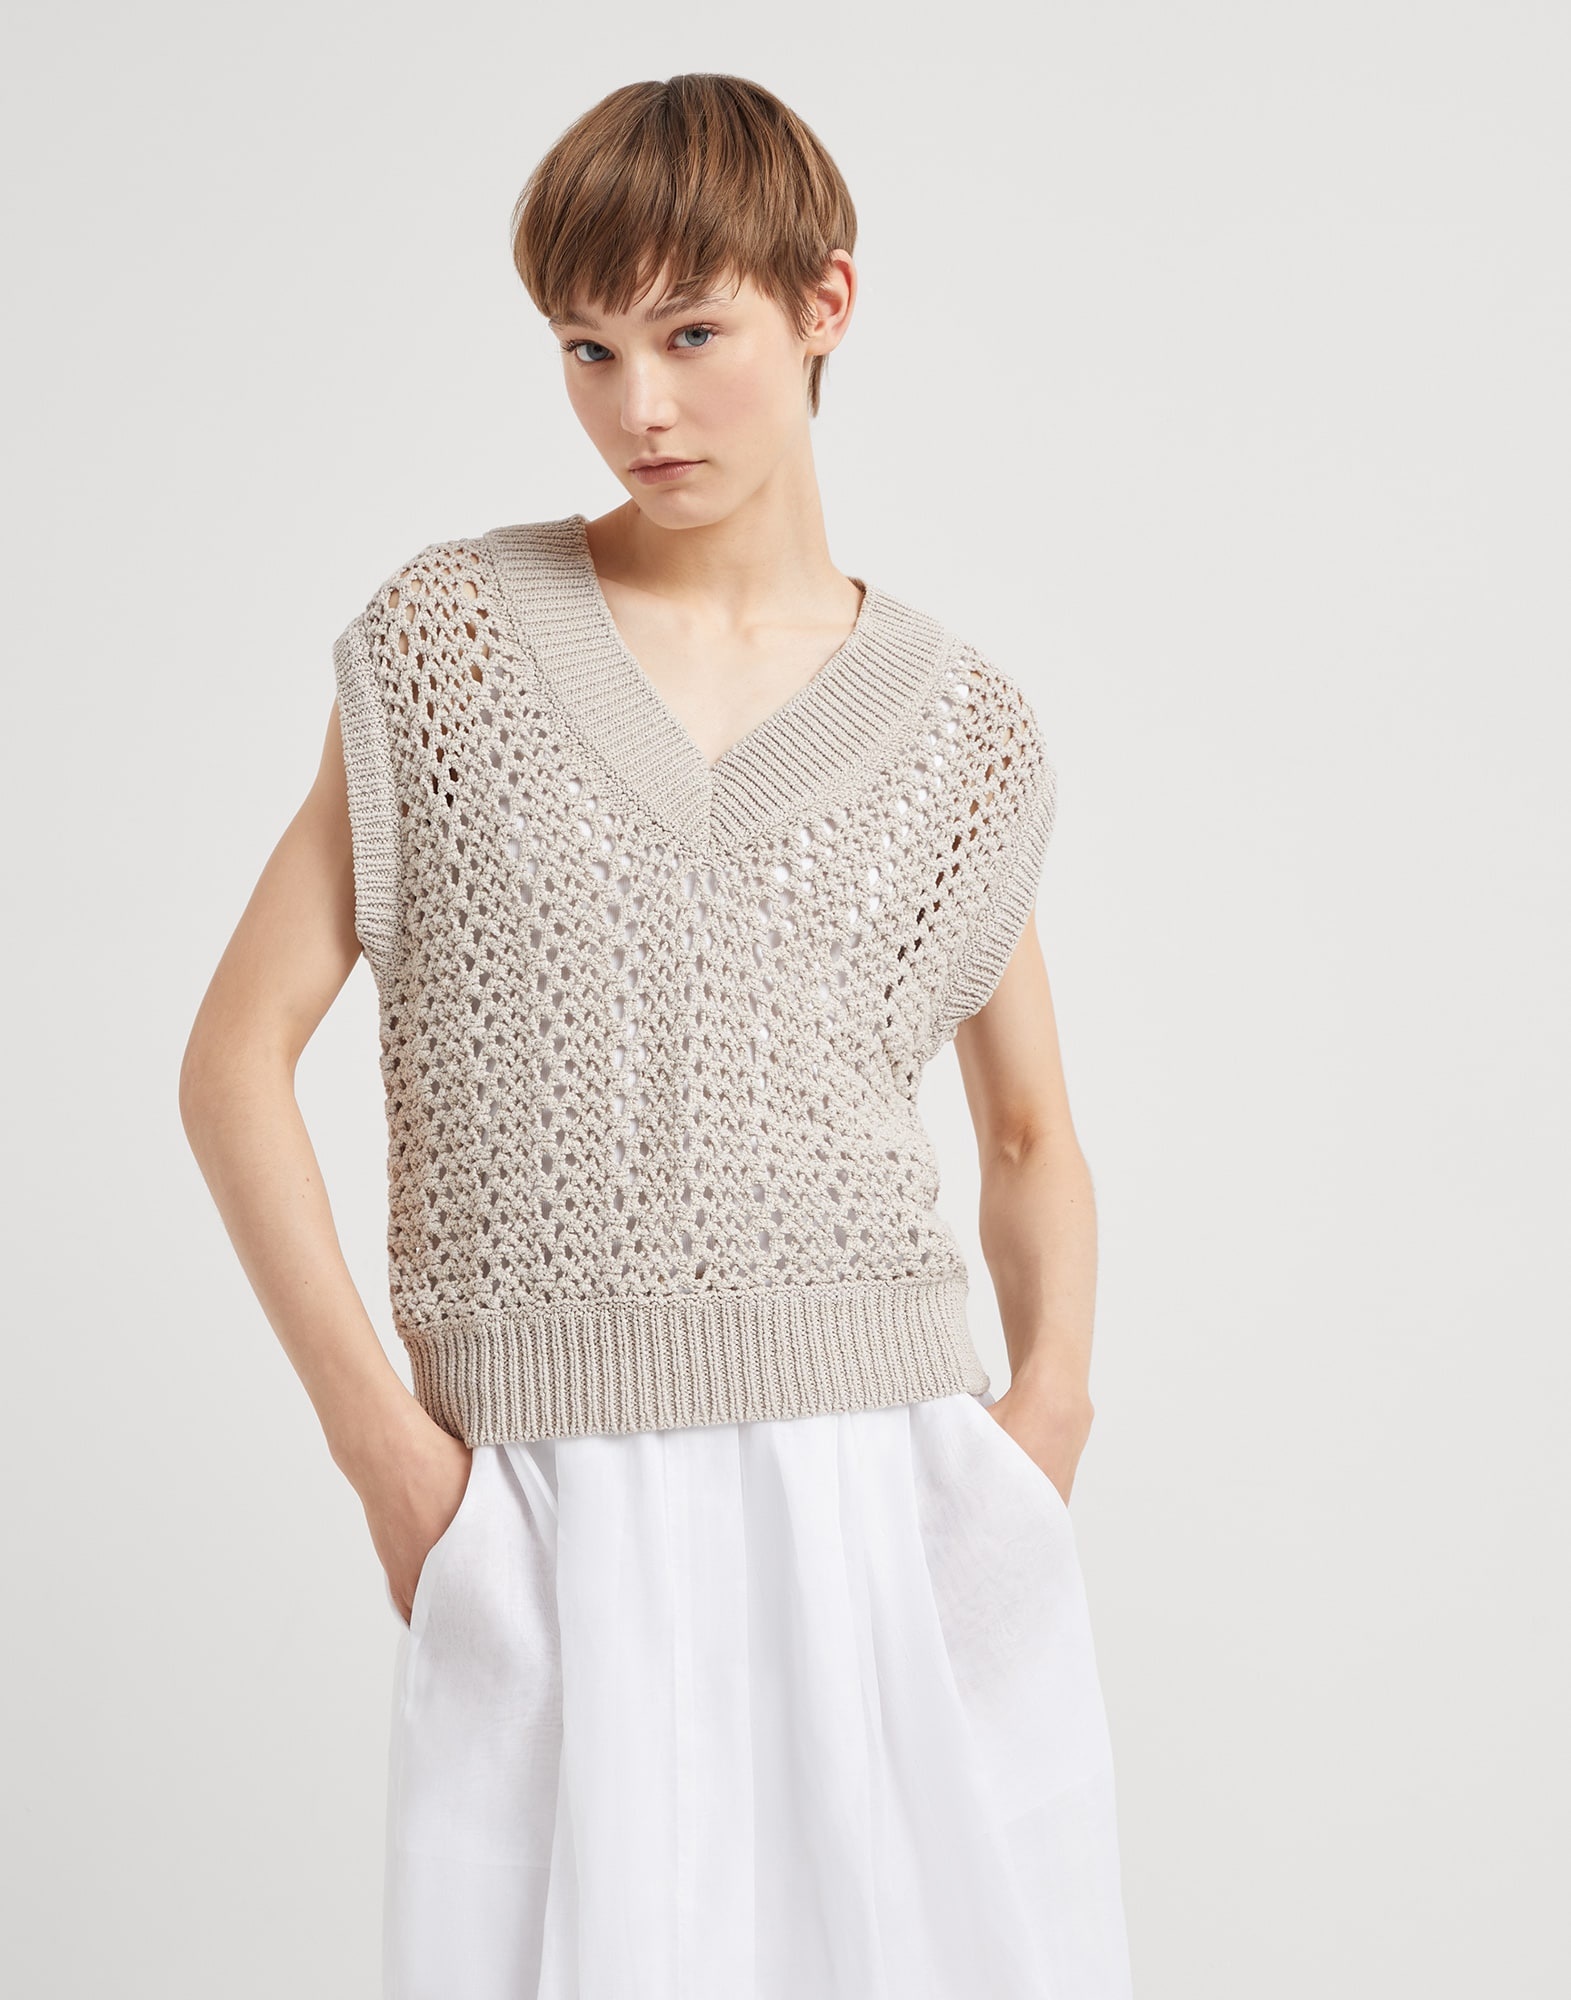 Techno cotton mesh knit top - 1